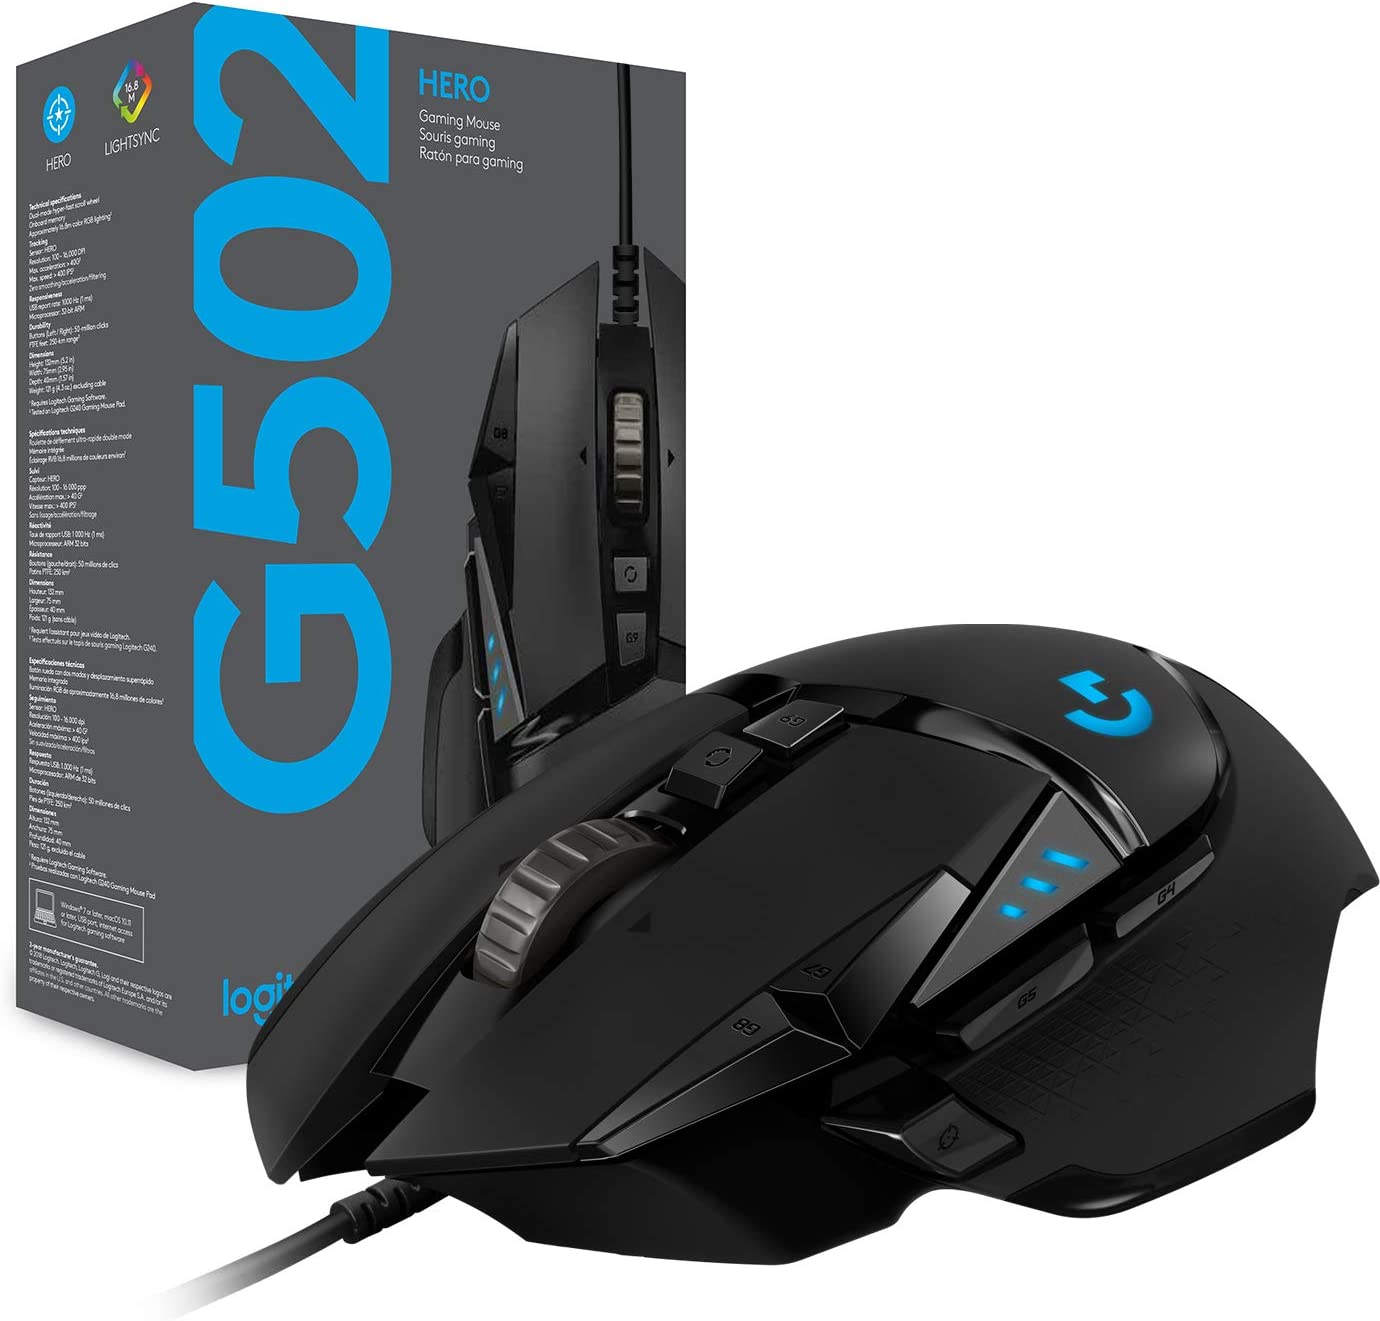 Logitech G G502 HERO Wired Gaming Mouse w/ RGB Lighting (Black) $39 + Free Shipping